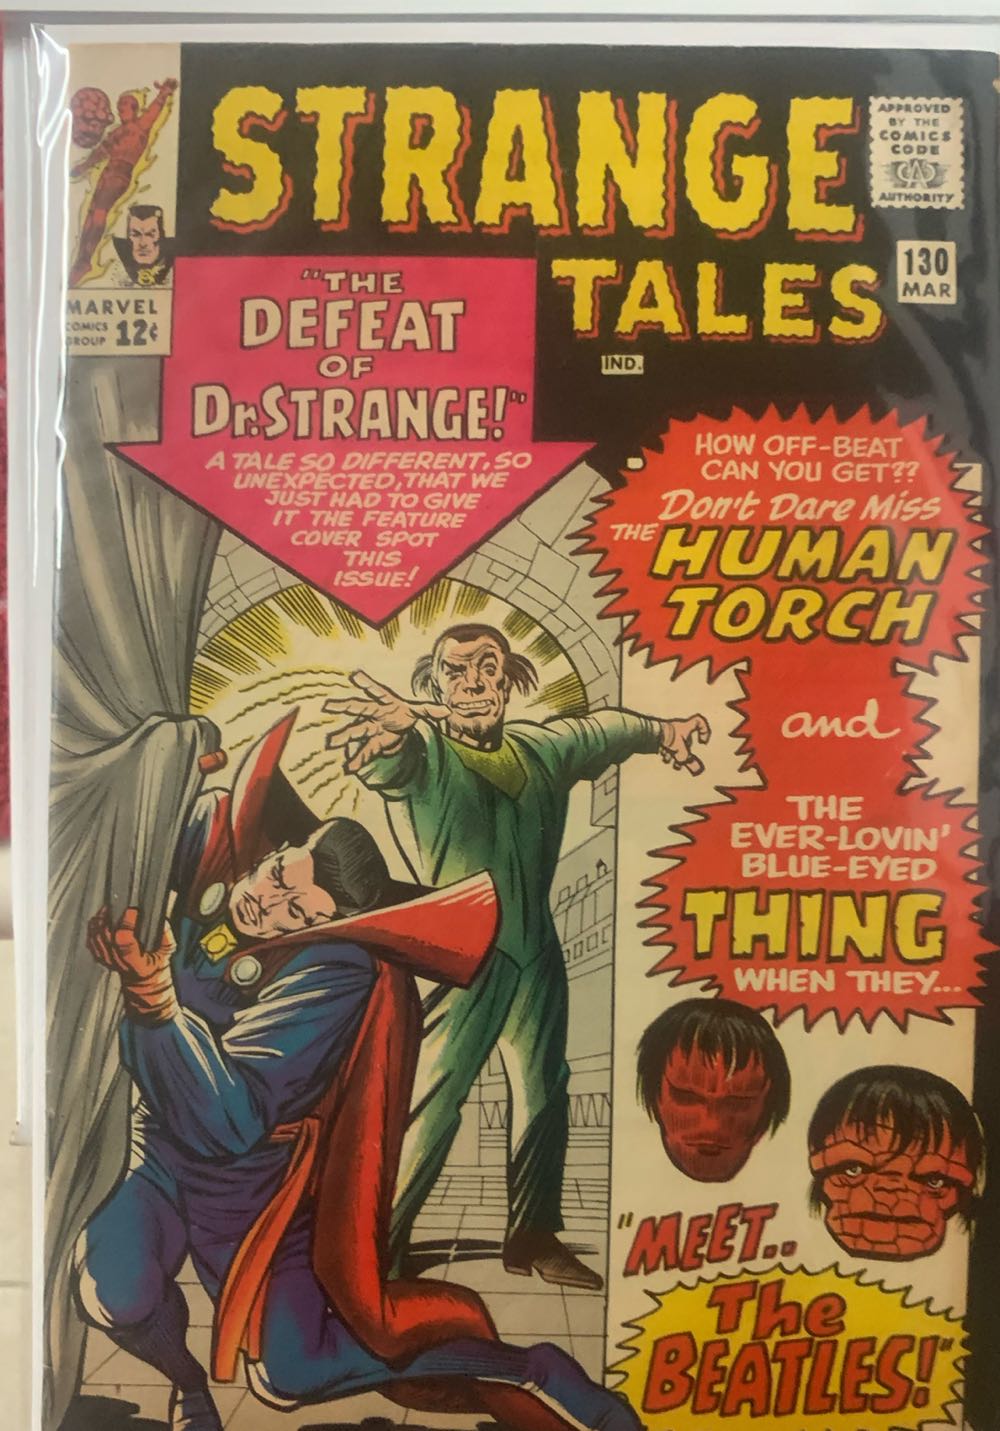 Strange Tales - Marvel Comics (130 - 03/1965) comic book collectible - Main Image 3